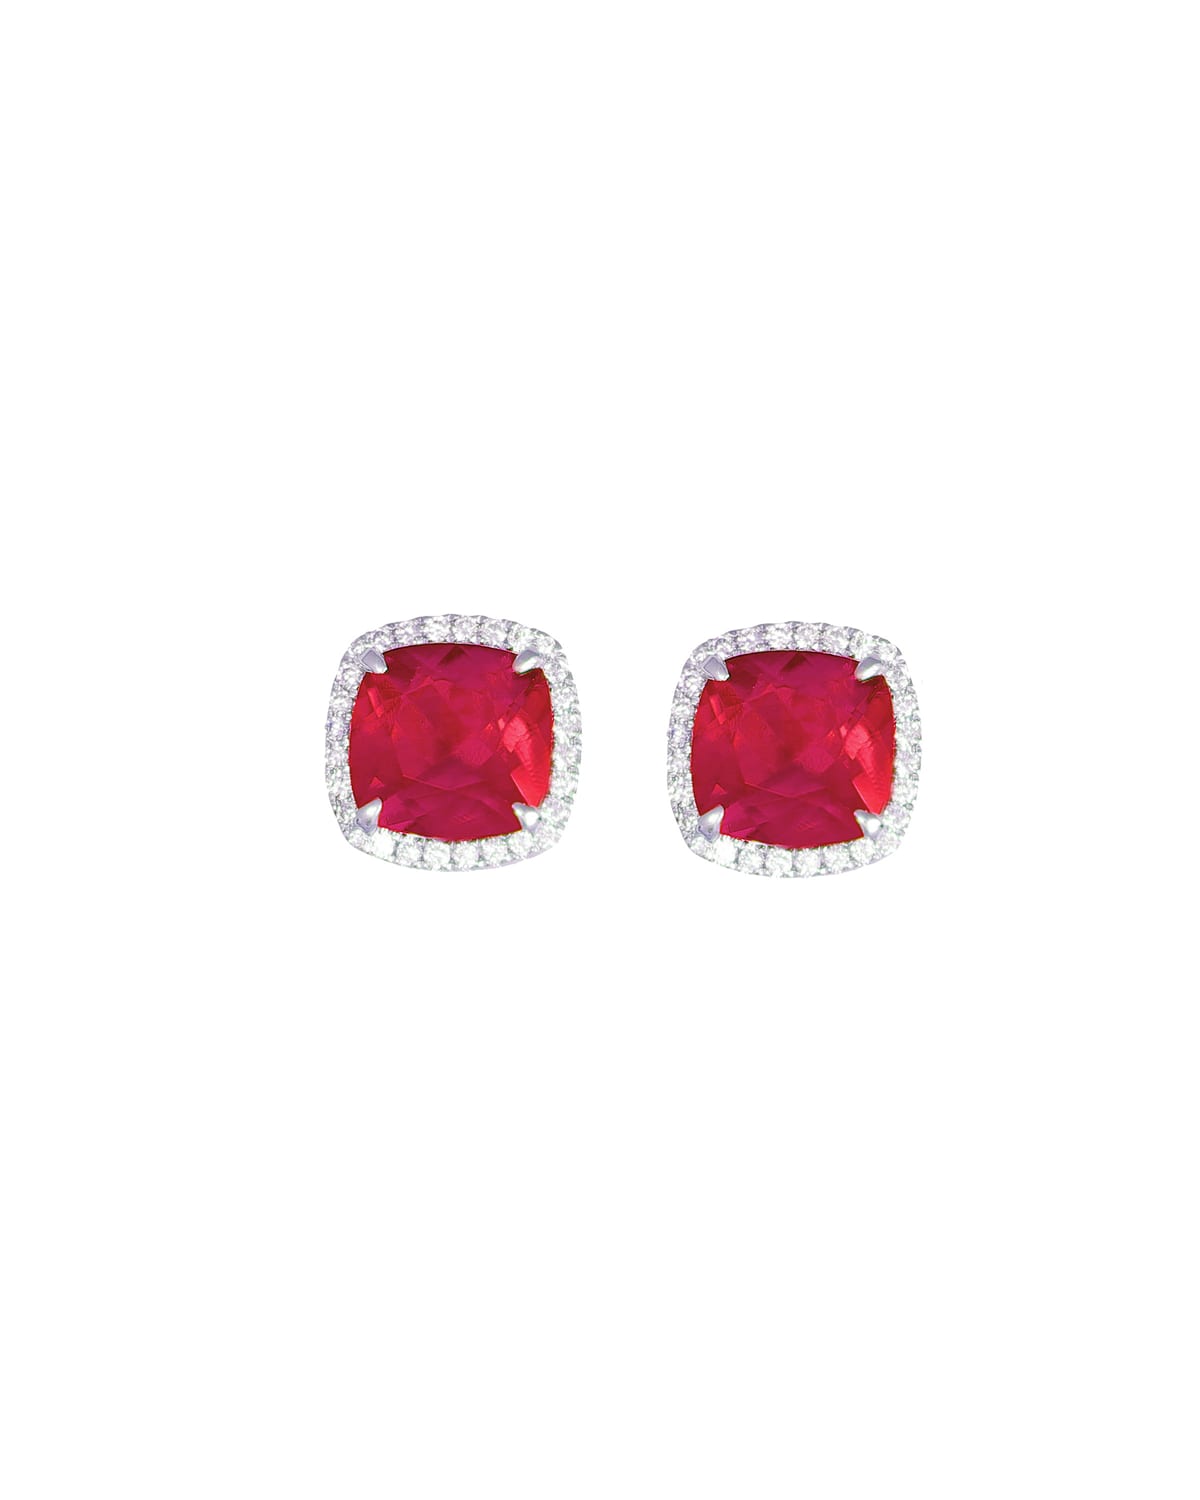 Frederic Sage 18k White Gold Ruby Cushion & Diamond Earrings